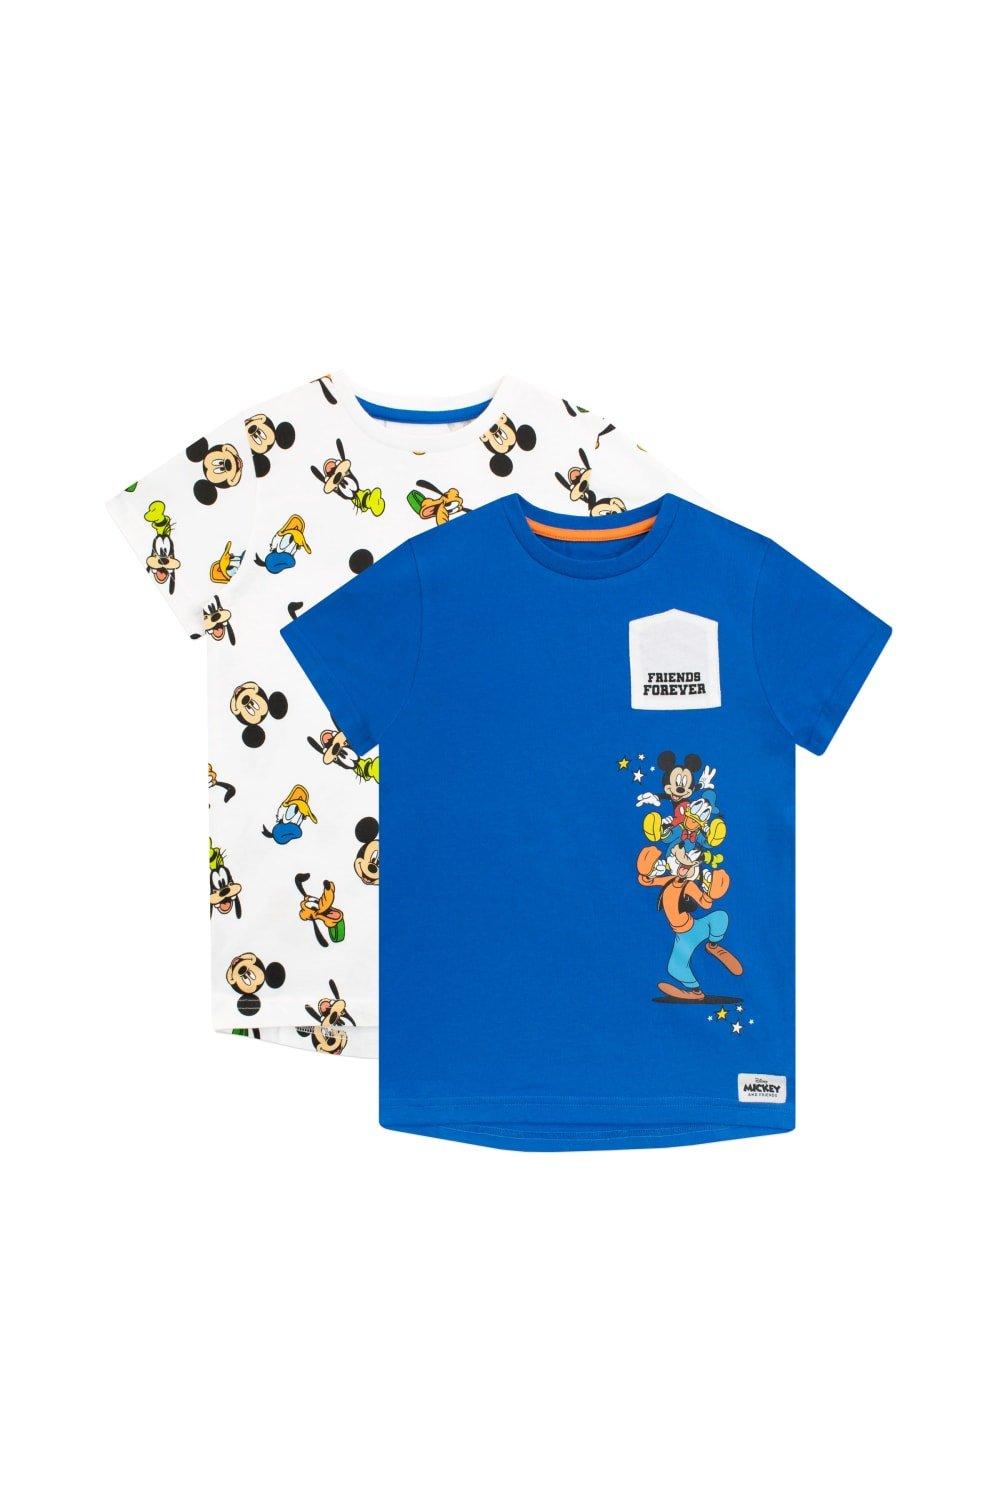 Набор футболок «Микки Маус и друзья», 2 шт. Disney, синий